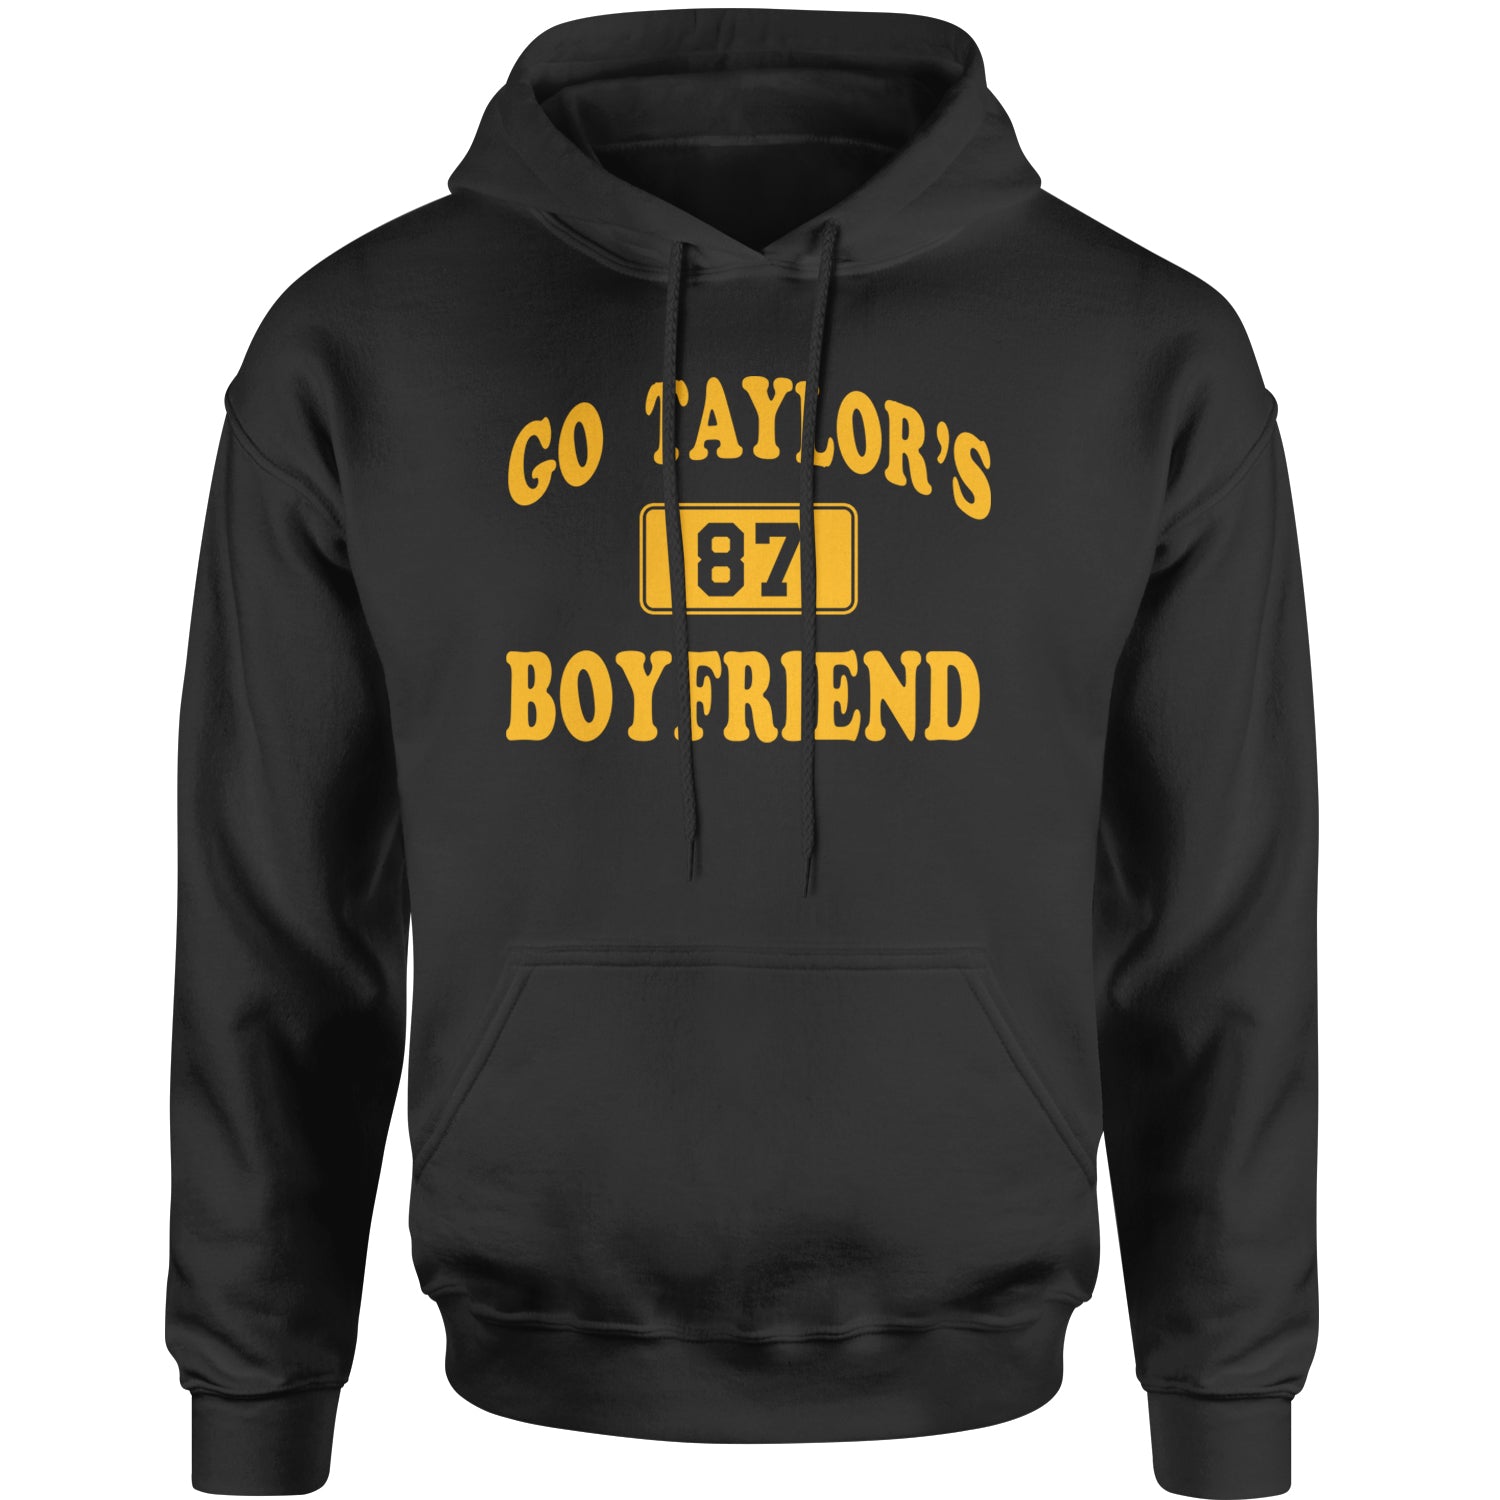 Go Taylor's Boyfriend Kansas City Adult Hoodie Sweatshirt